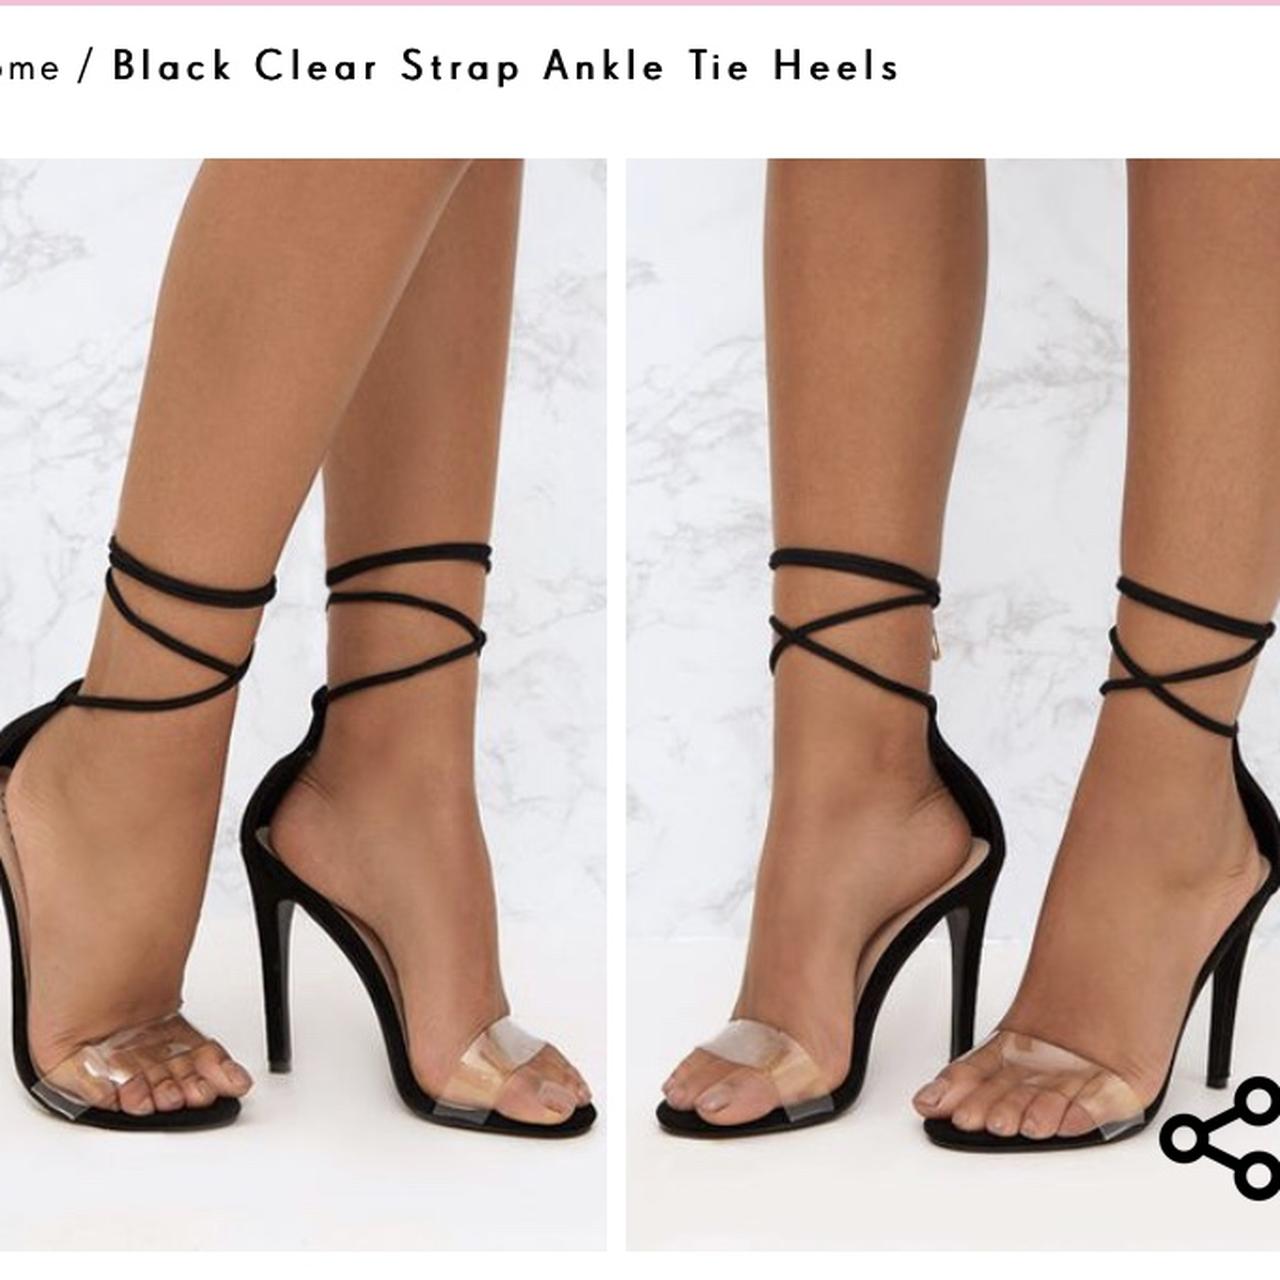 Black Clear Strap Ankle Tie Heels